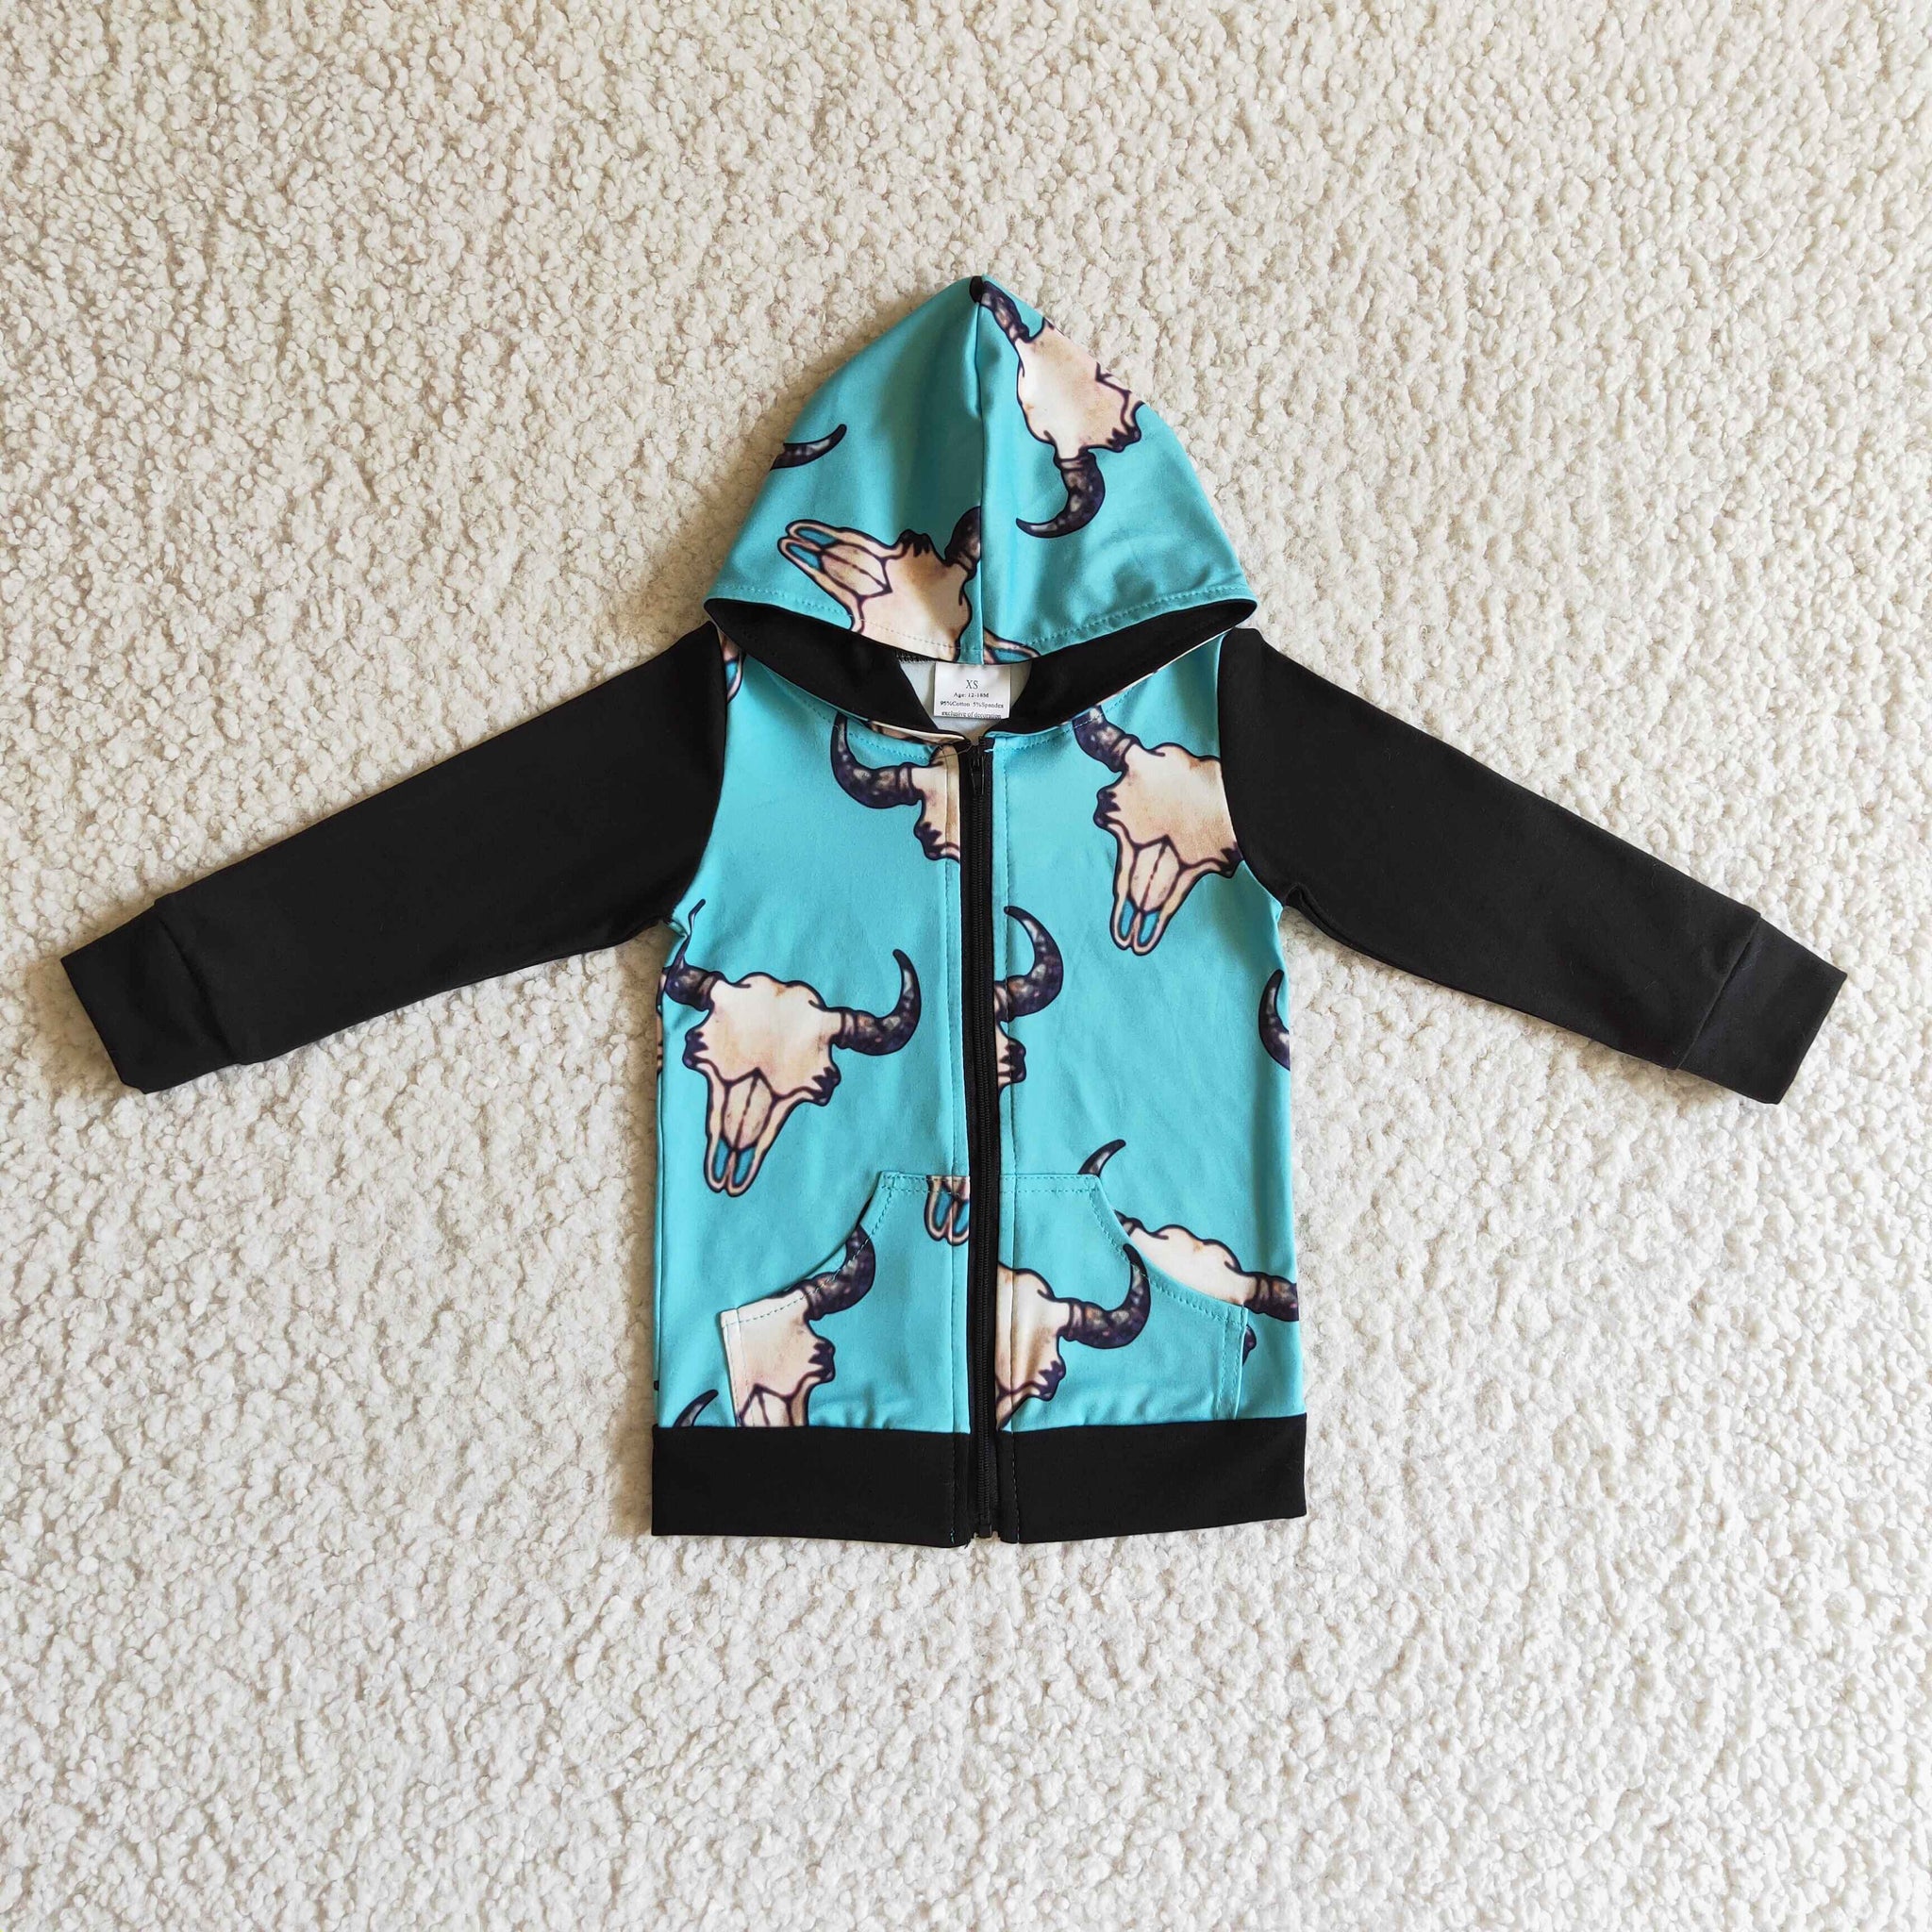 BT0083 baby boy clothes winter hoodies jackets